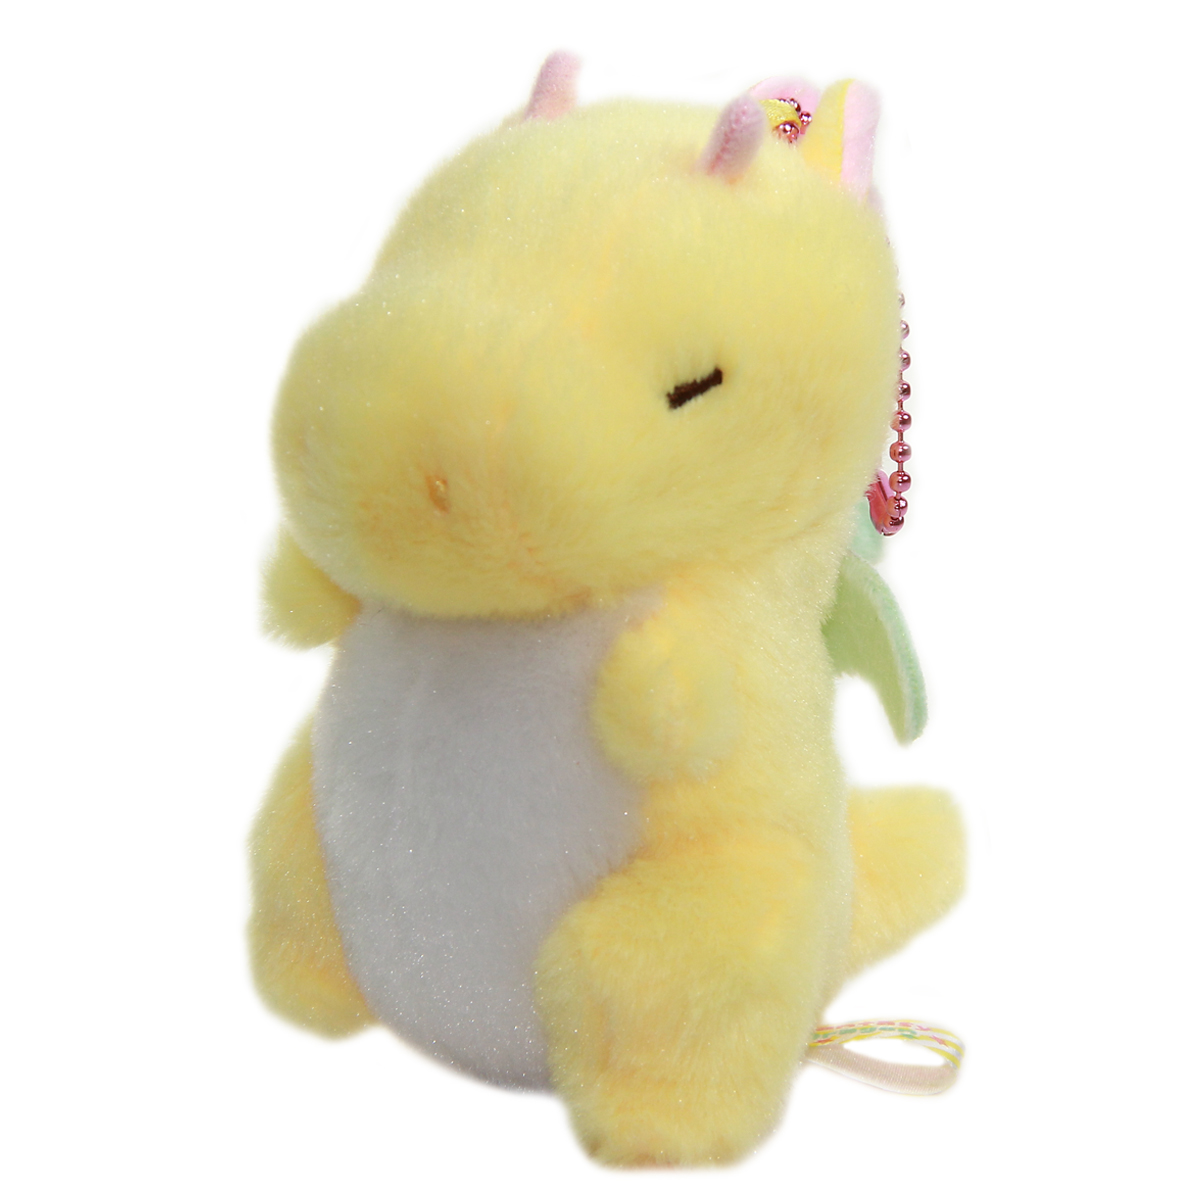 Fantasy Dragon Plushie Soft Stuffed Animal Toy Keychain Yellow Small Size 4 Inches